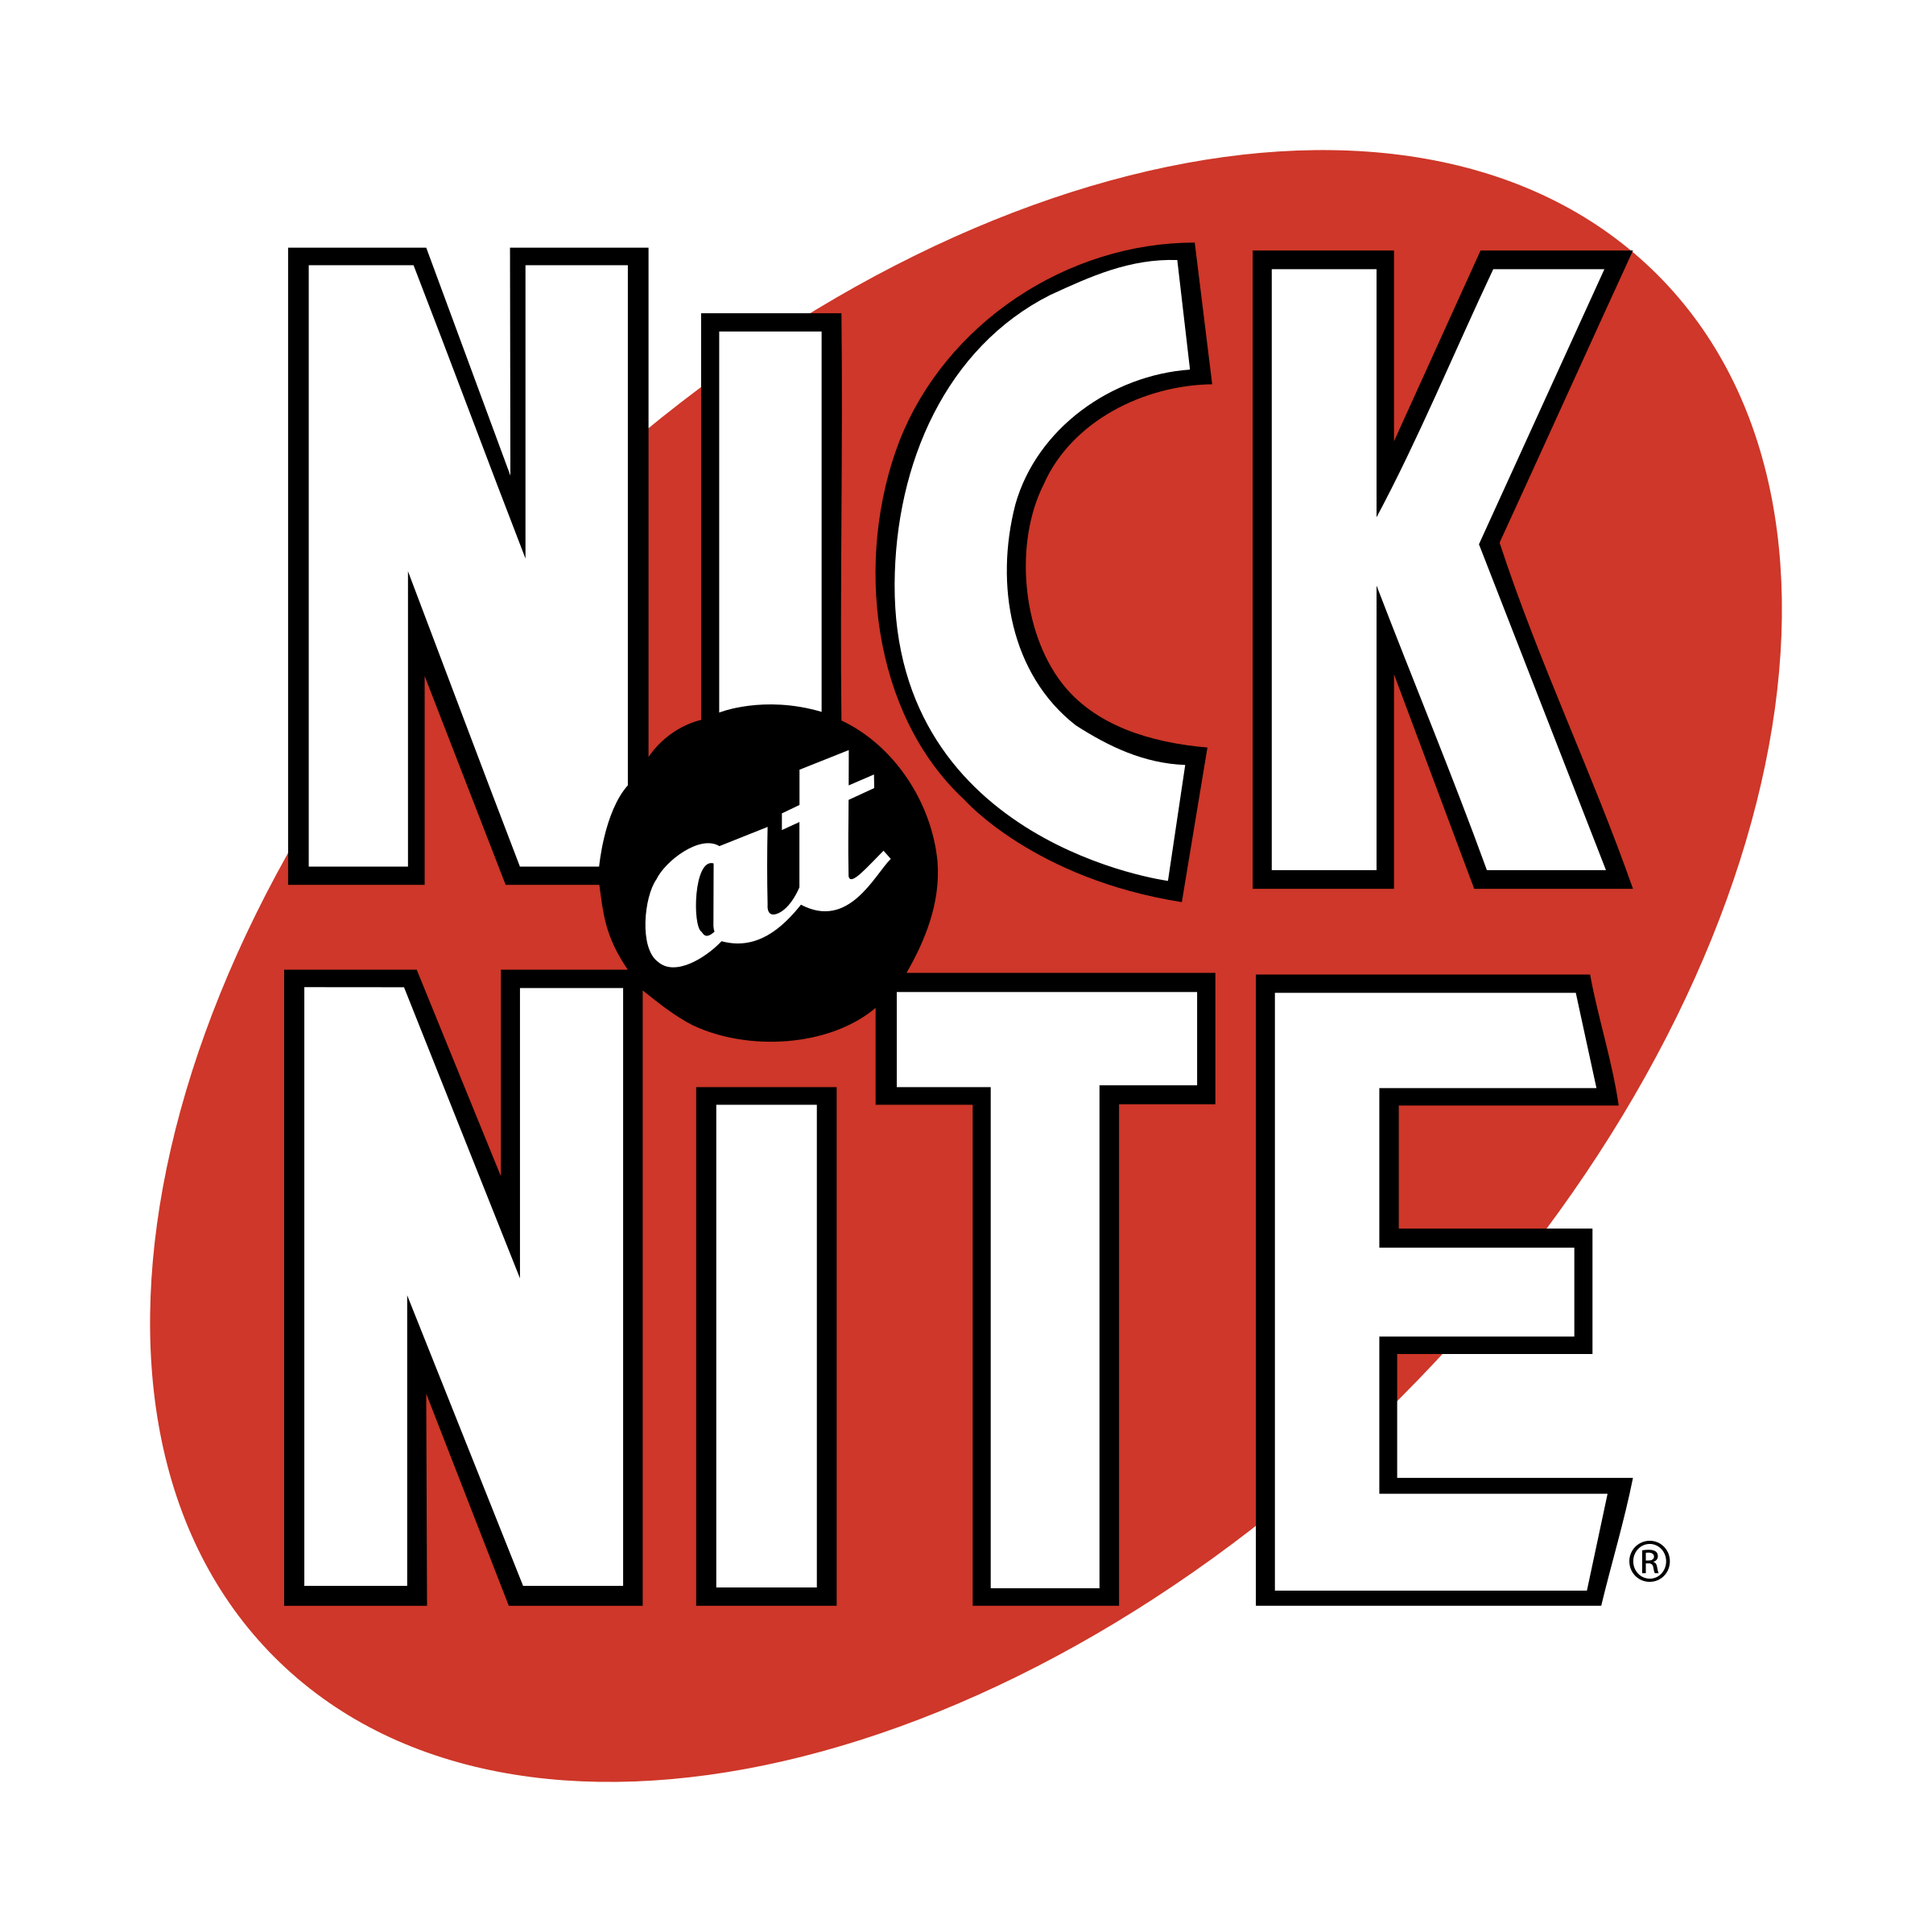 Nick at Nite Logo - Nick at Nite Logo PNG Transparent & SVG Vector - Freebie Supply